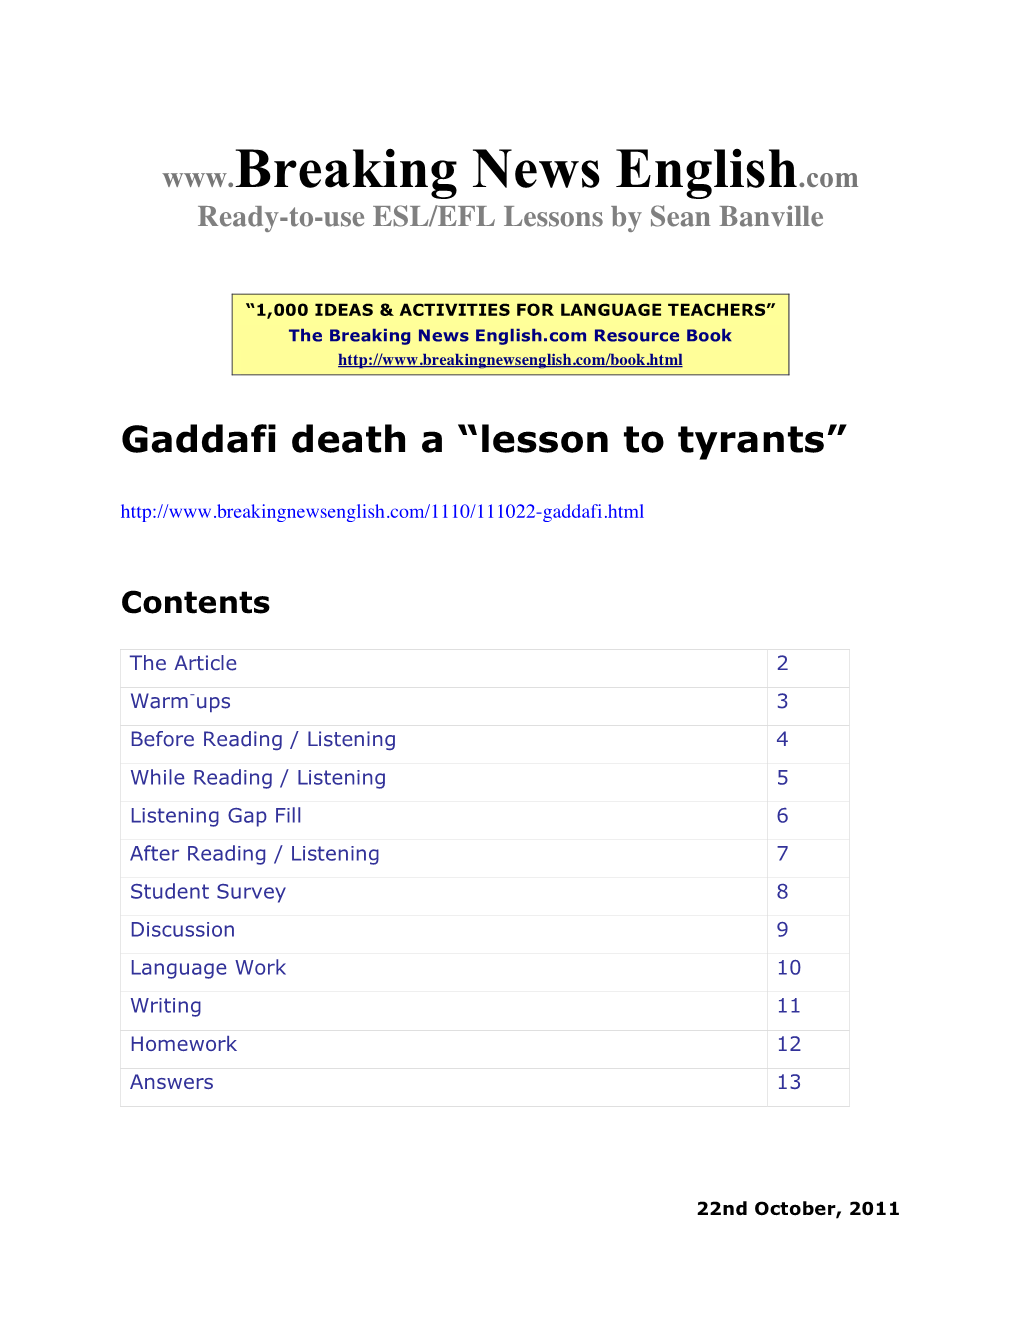 Gaddafi Death a “Lesson to Tyrants”